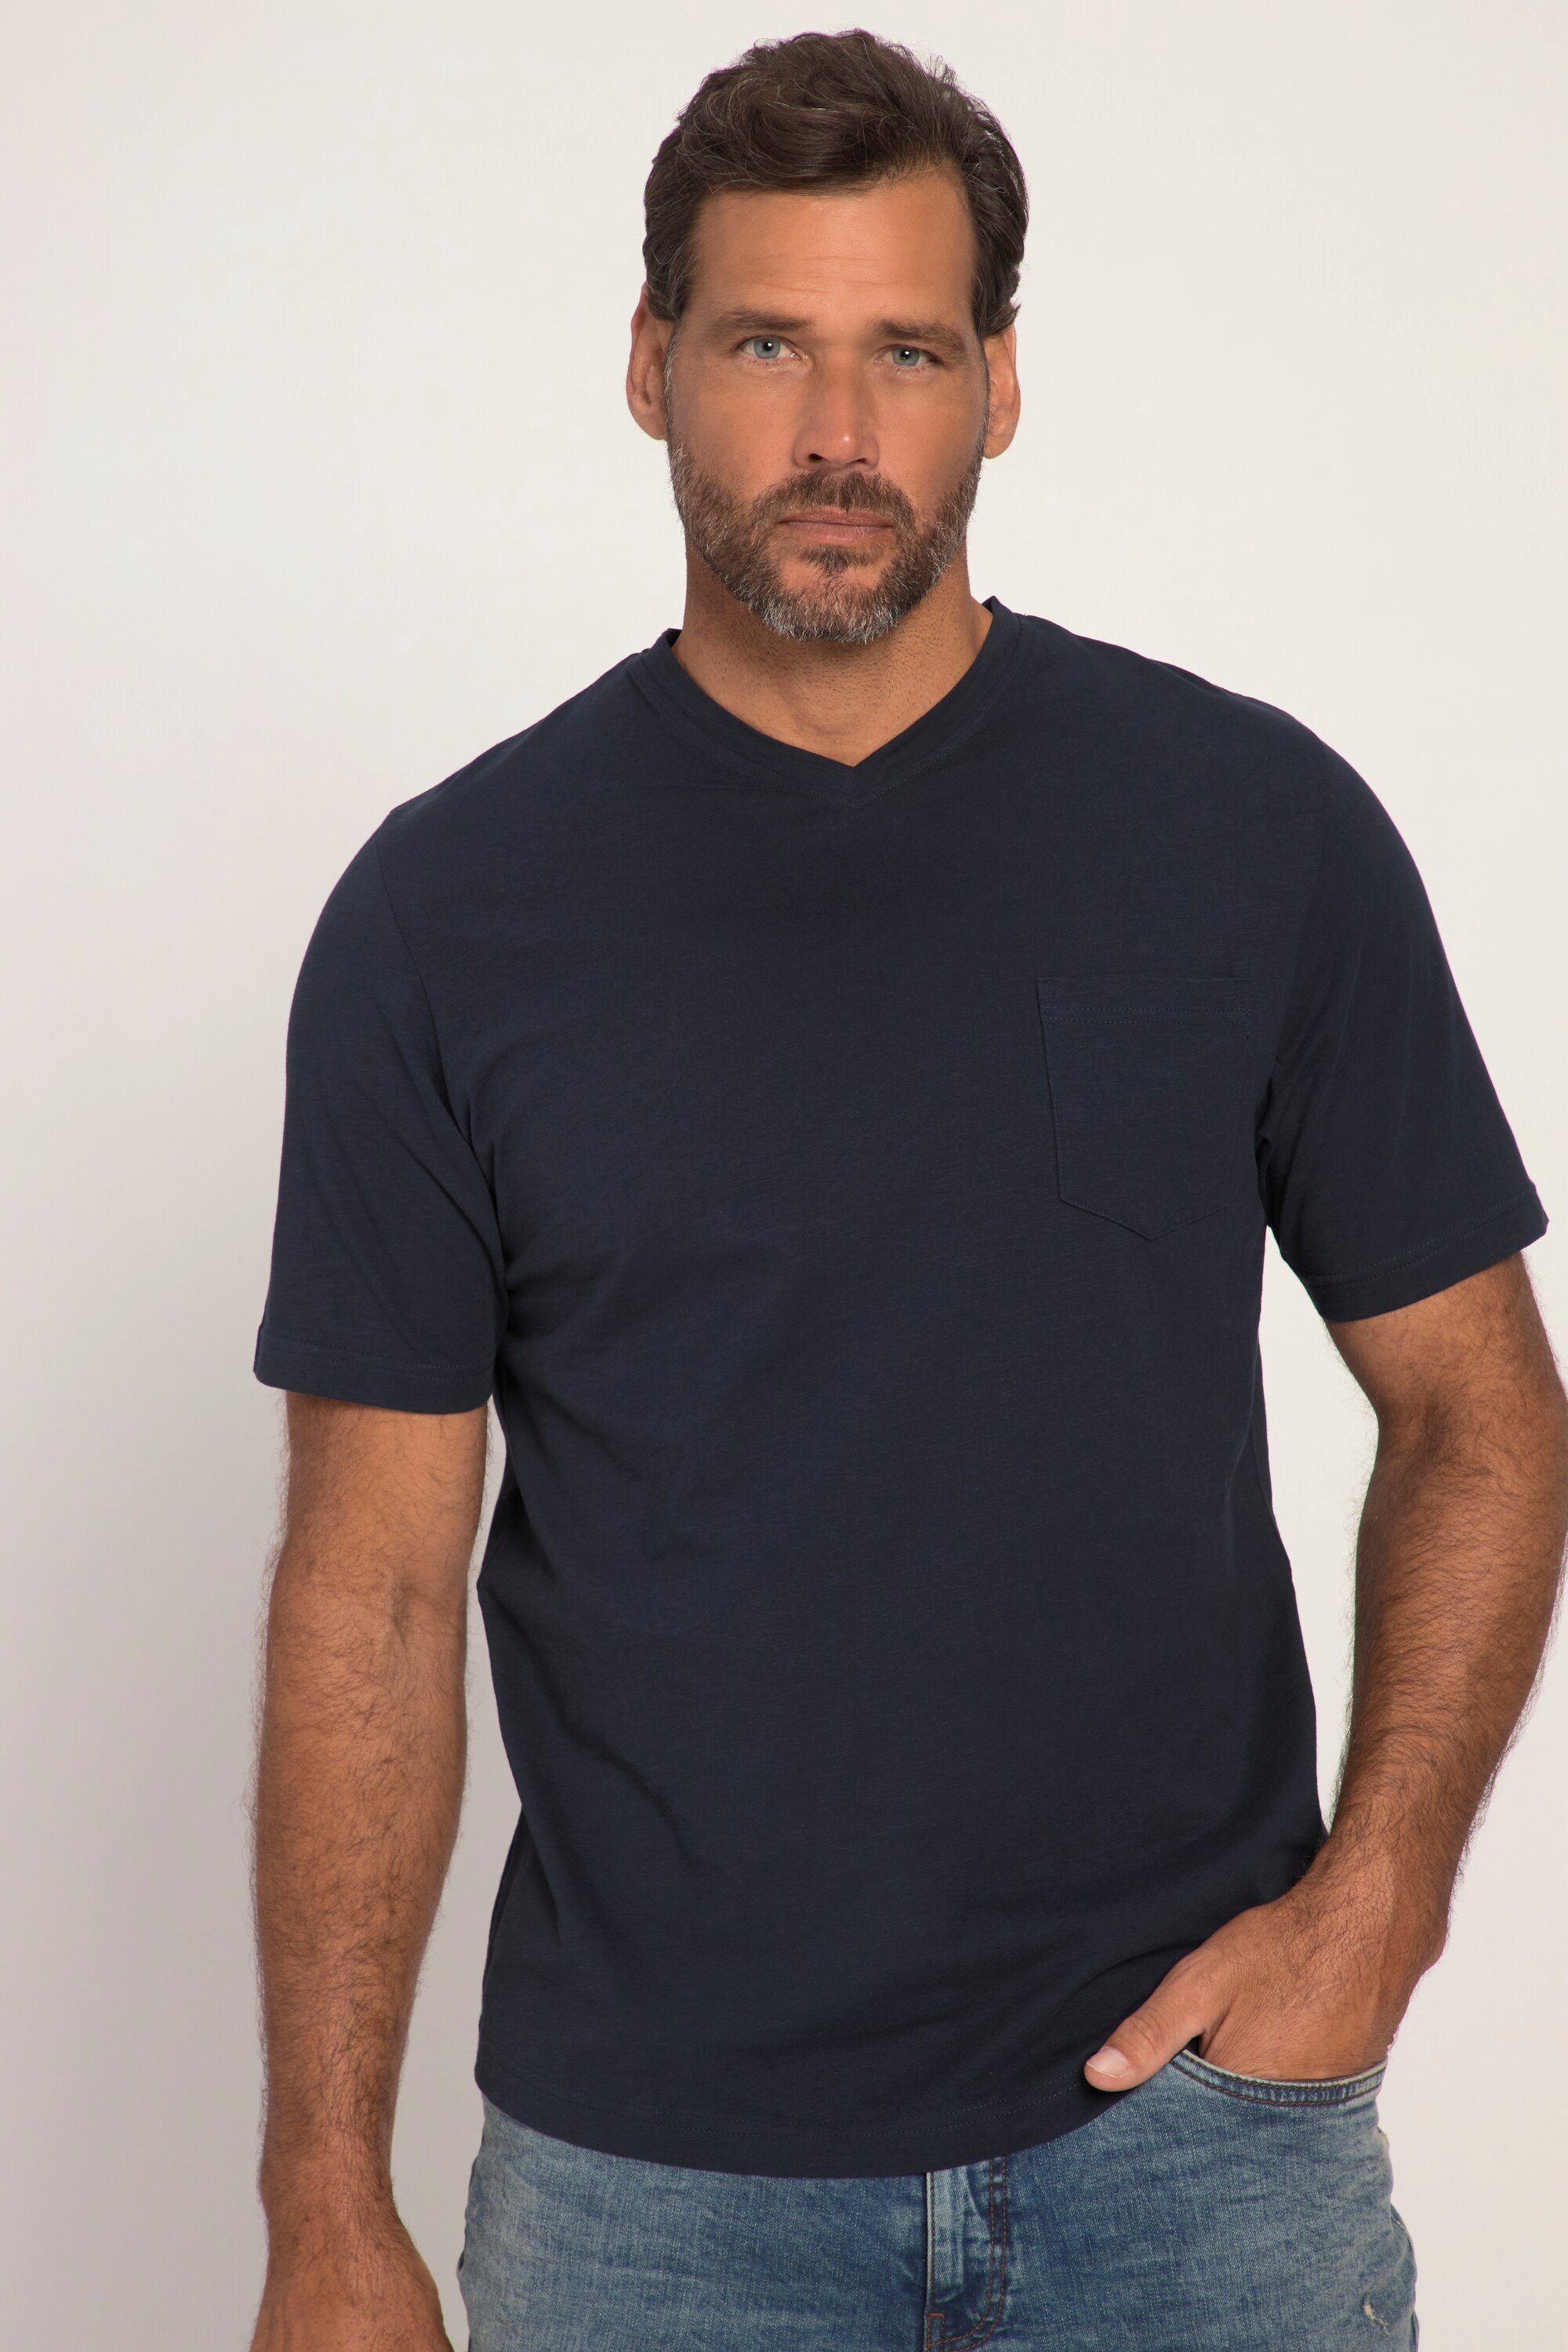 Basic JP1880 T-Shirt blau navy Flammjersey Halbarm V-Ausschnitt T-Shirt